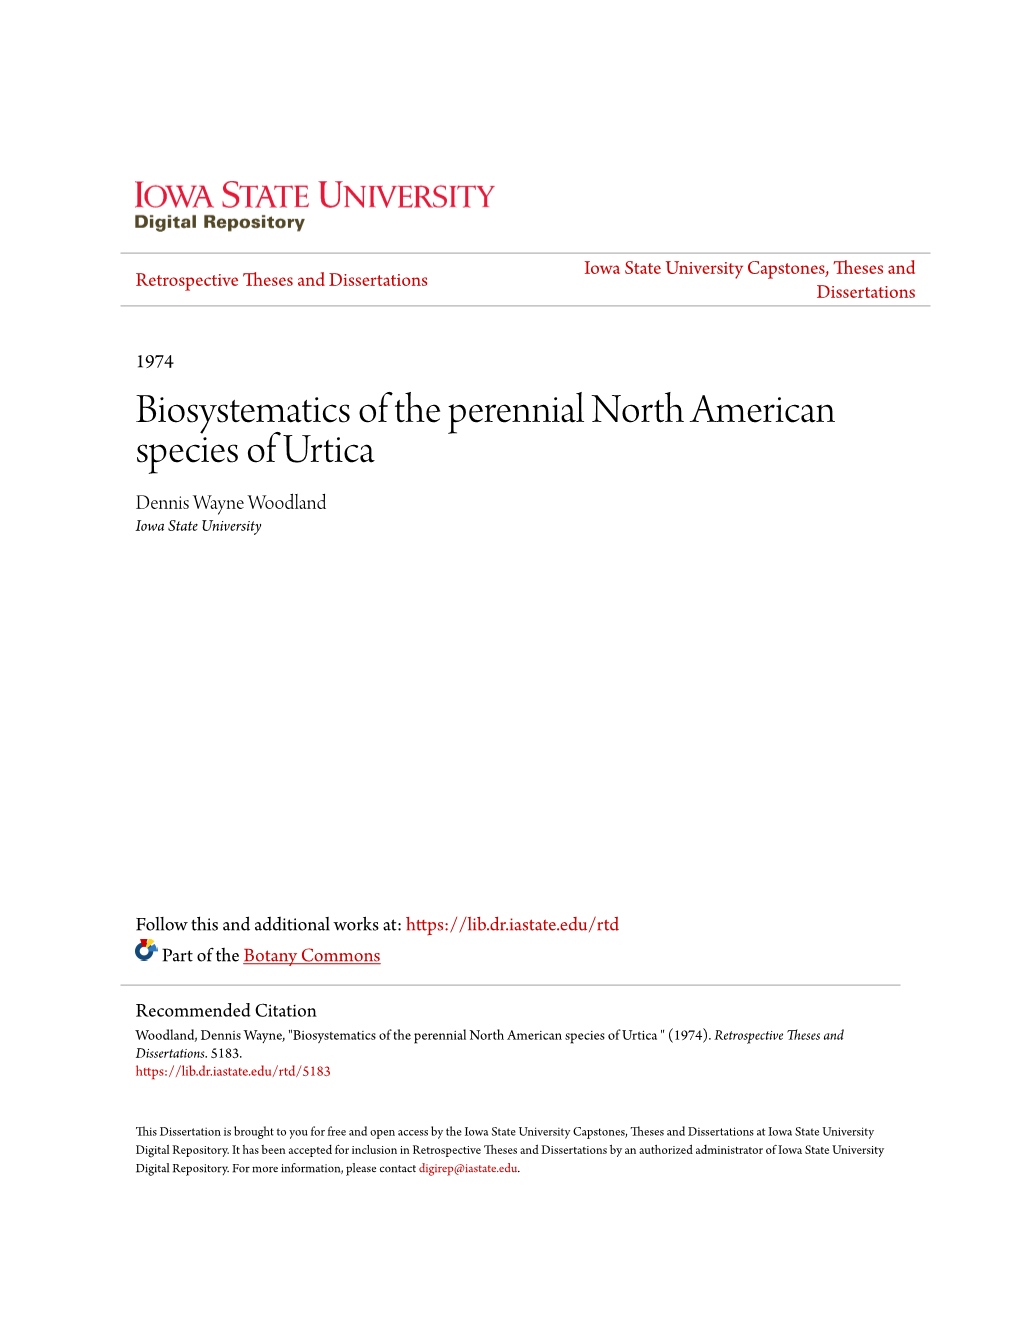 Biosystematics of the Perennial North American Species of Urtica Dennis Wayne Woodland Iowa State University